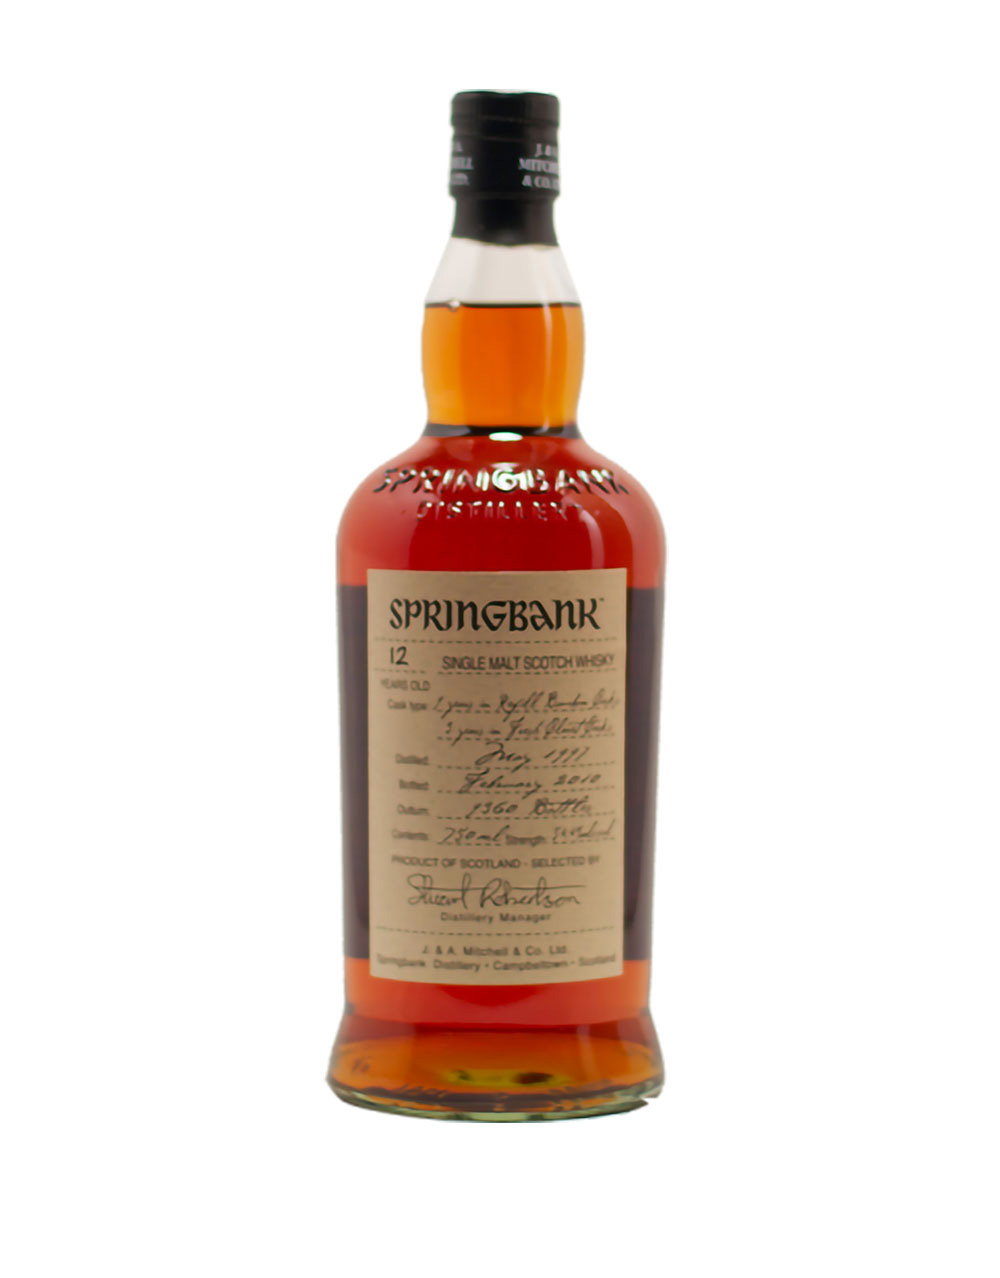 Springbank 12 Year Old Single Malt Scotch Whisky